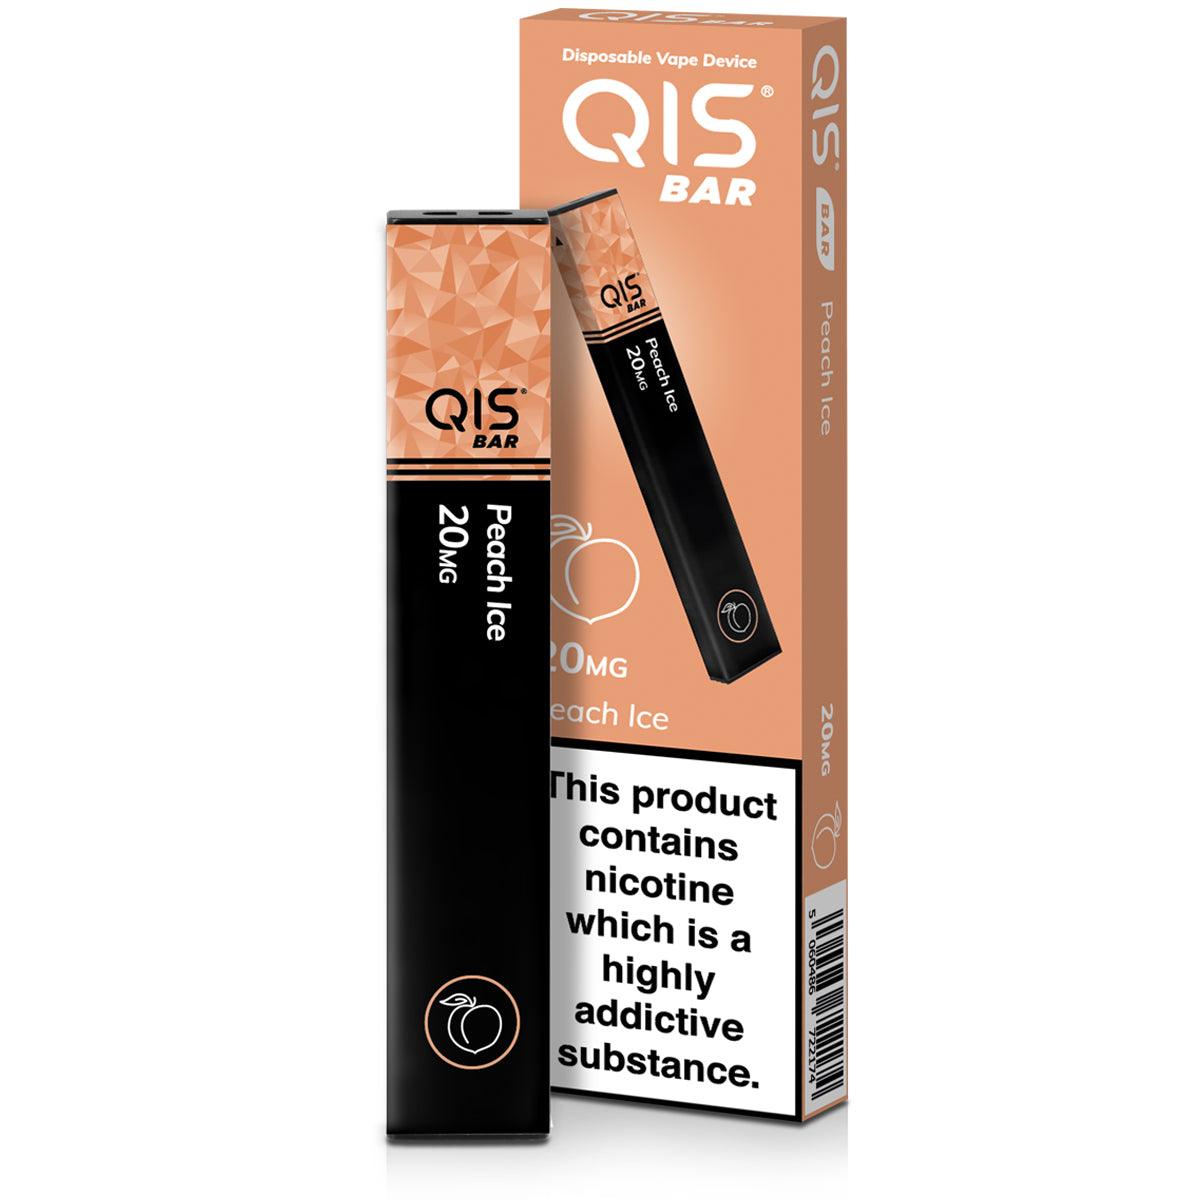 Qis Disposable Vape Device - peach ice